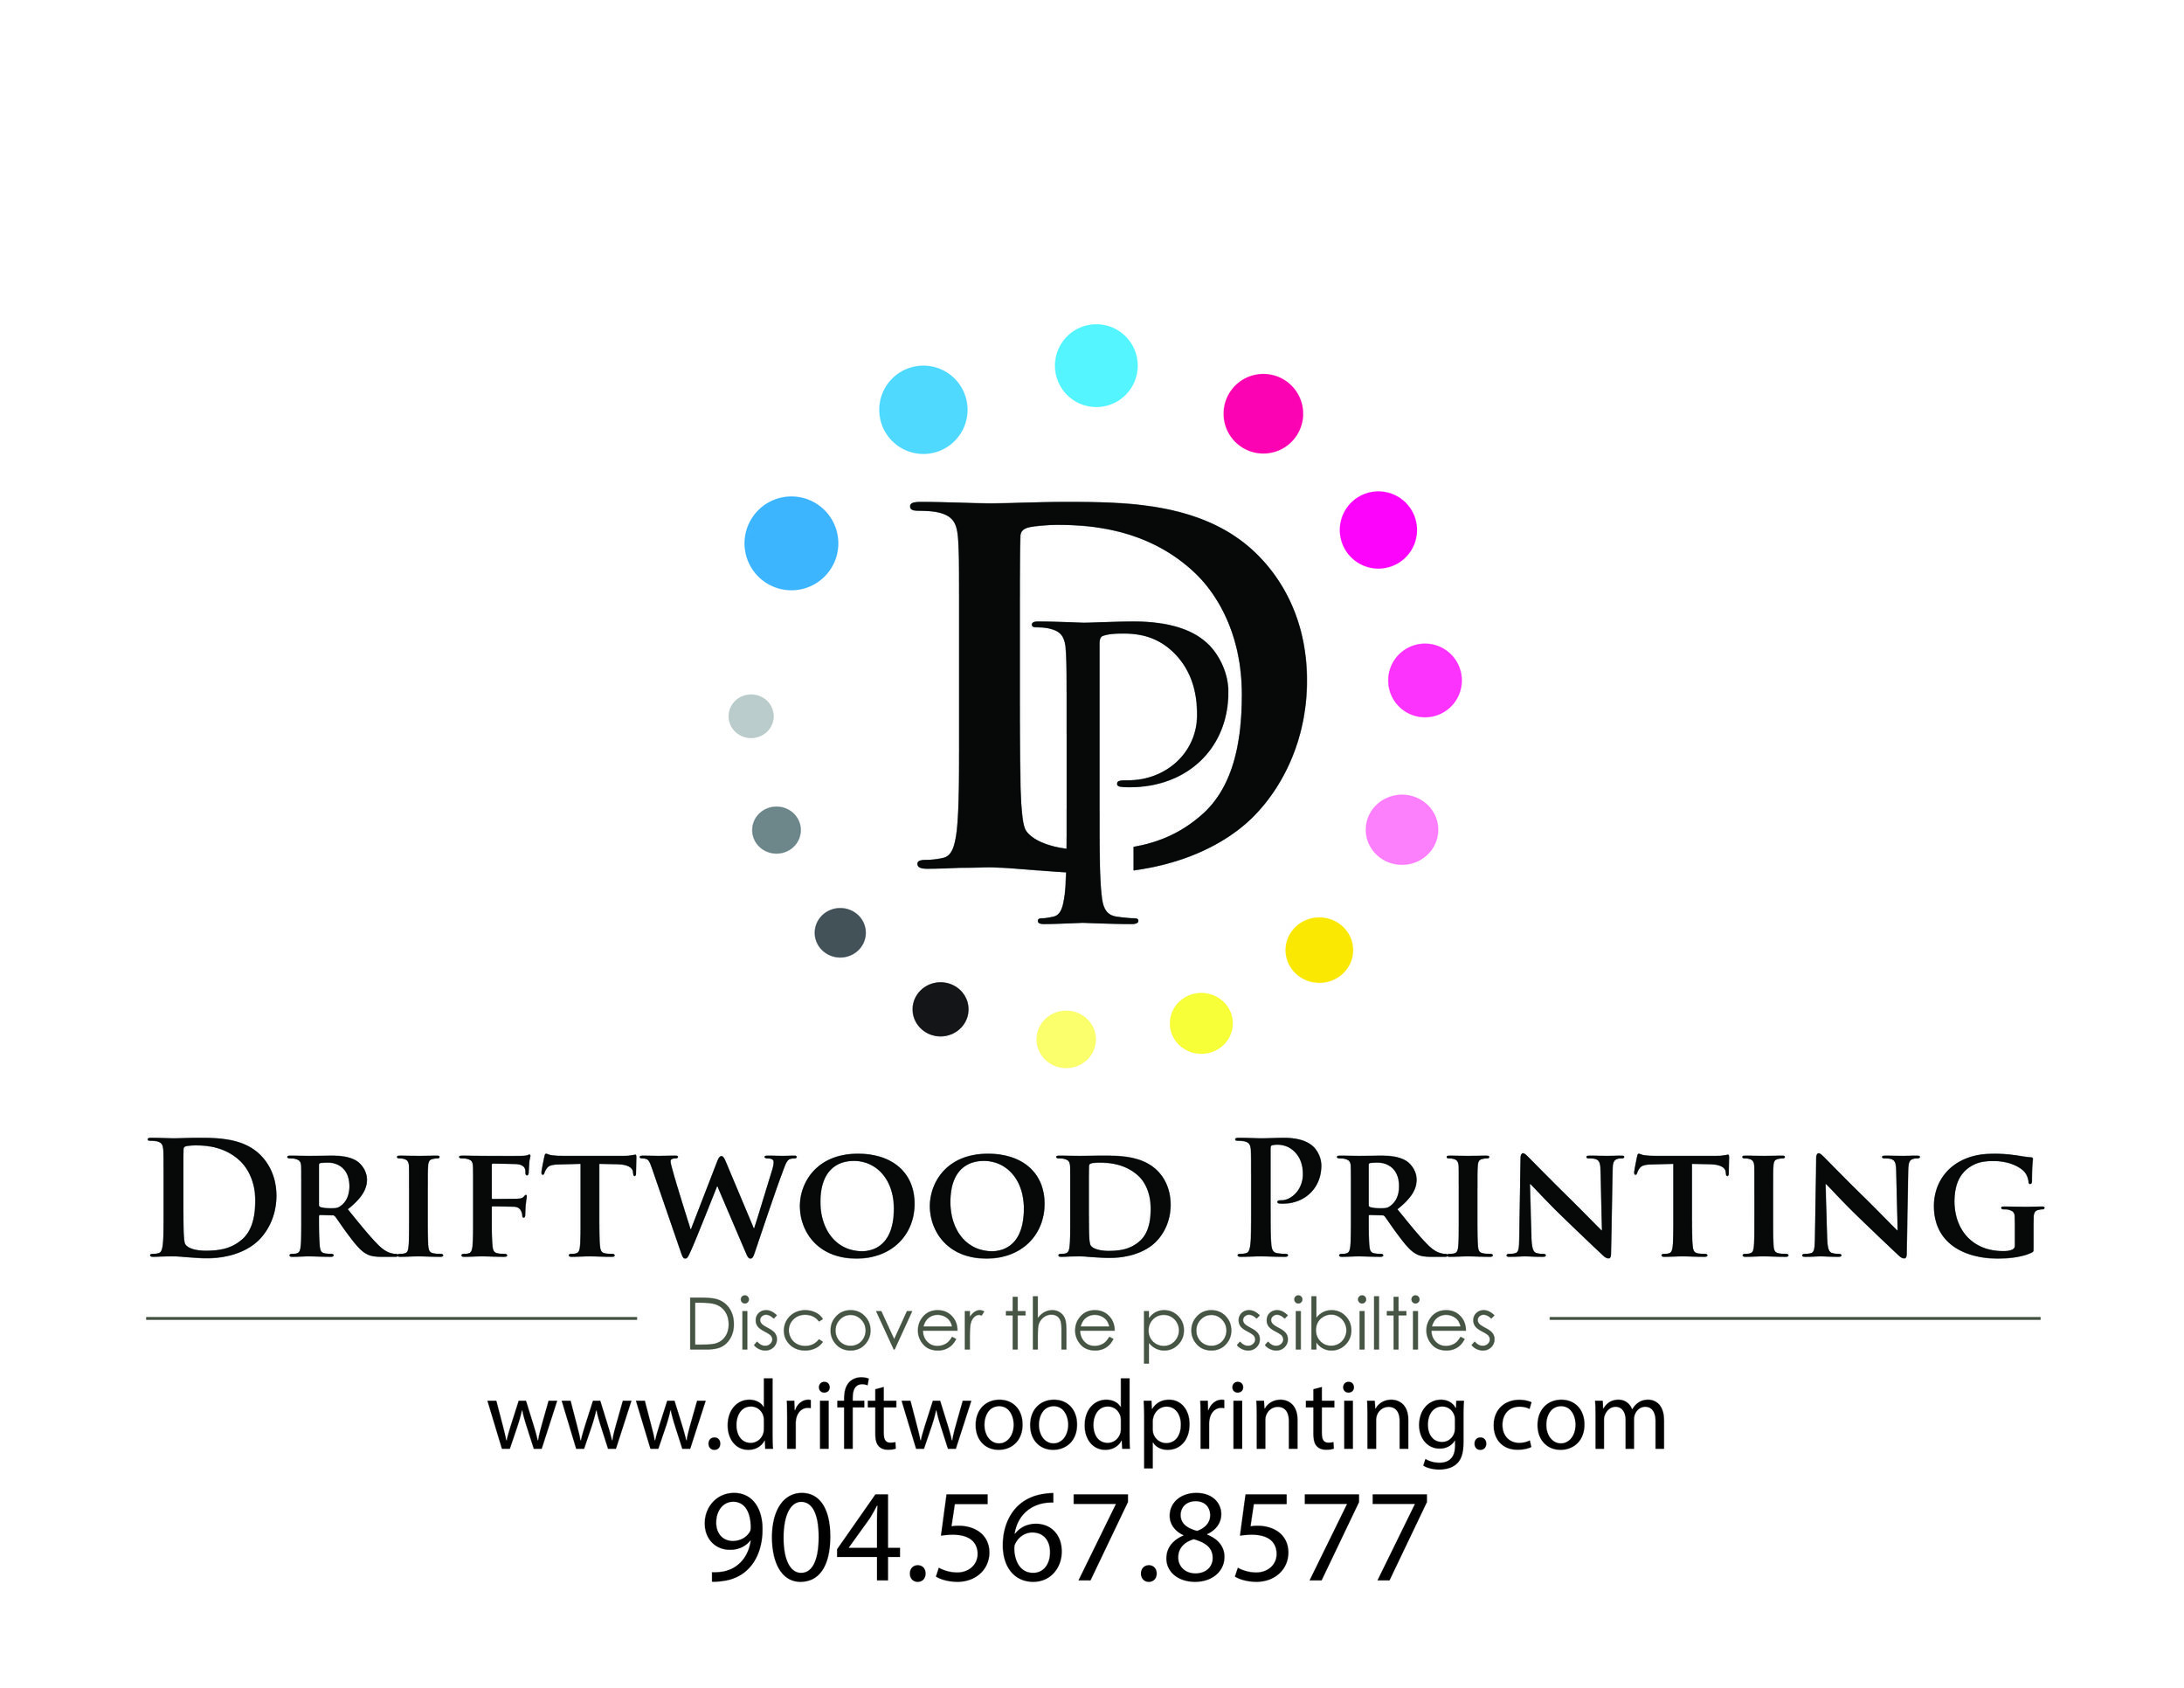 Driftwood printing Logo CMYK phone.jpg